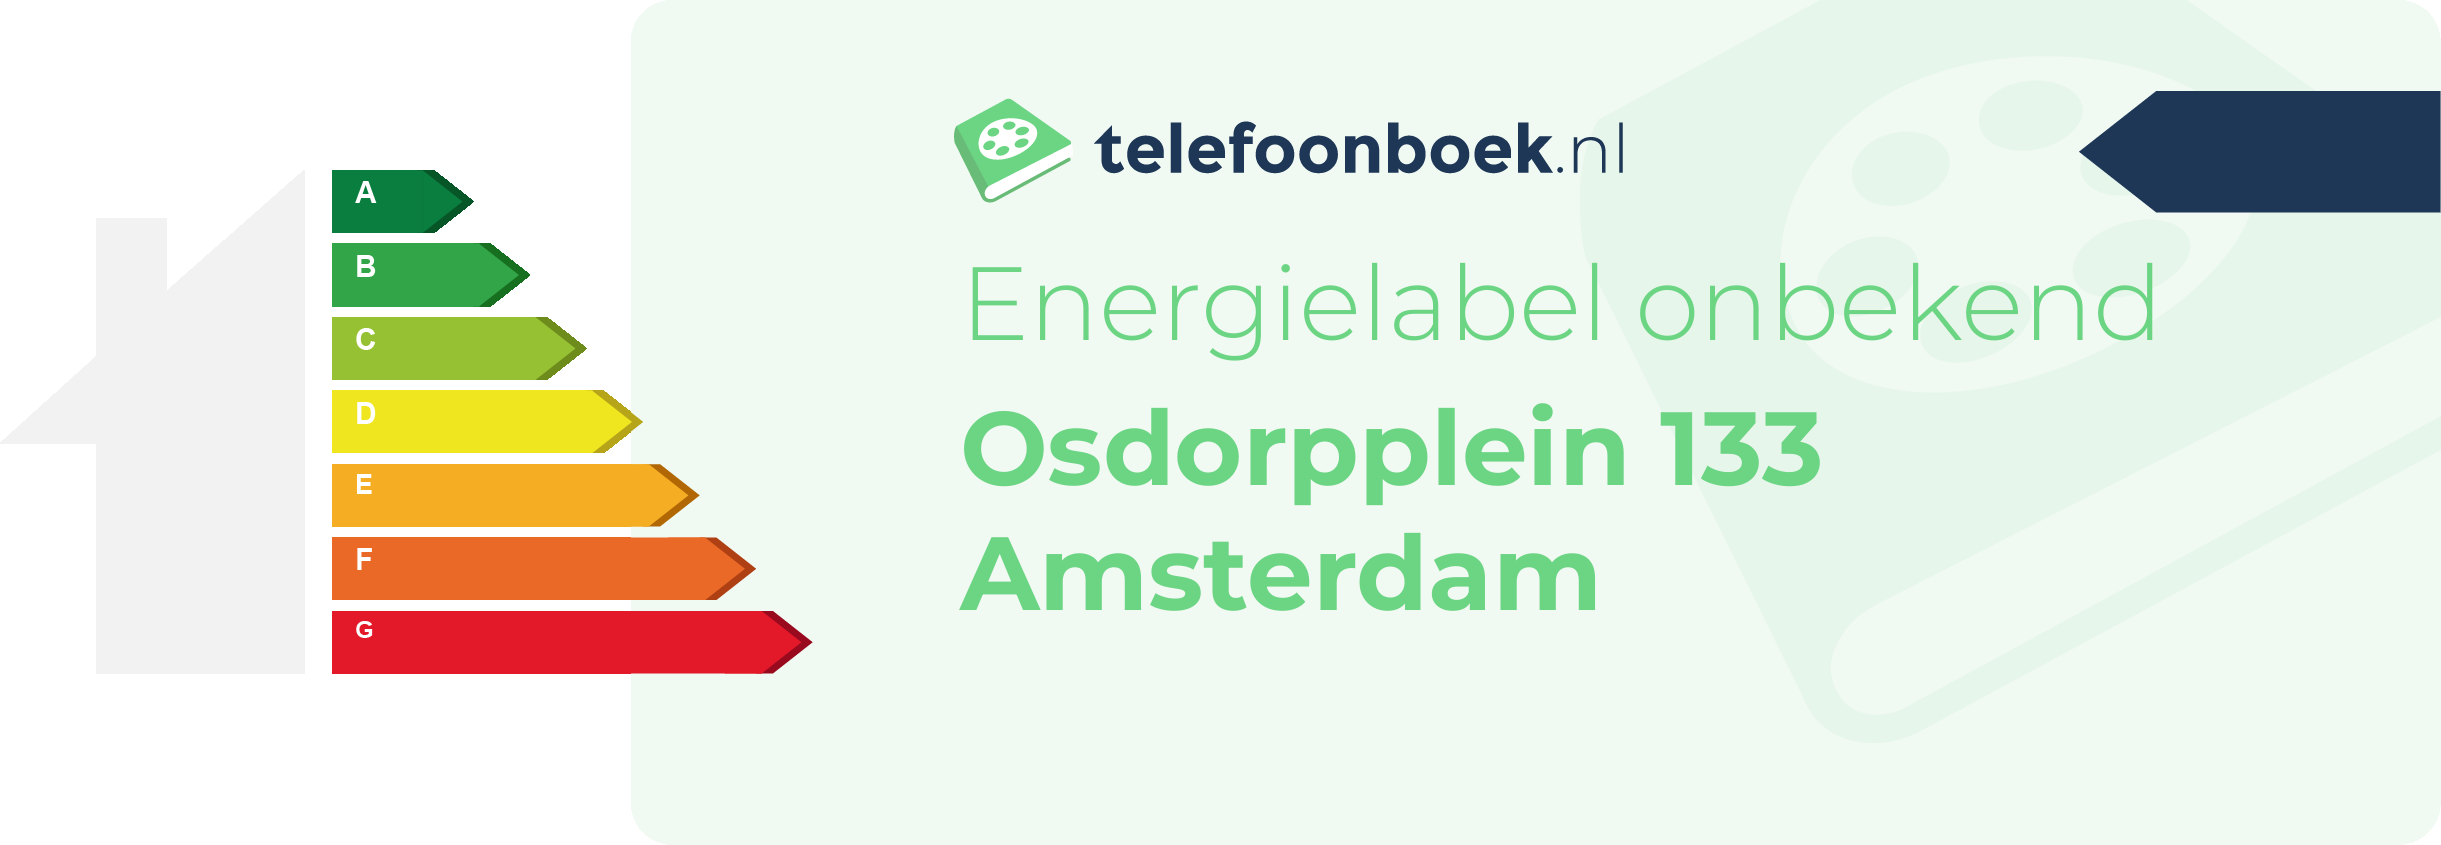 Energielabel Osdorpplein 133 Amsterdam